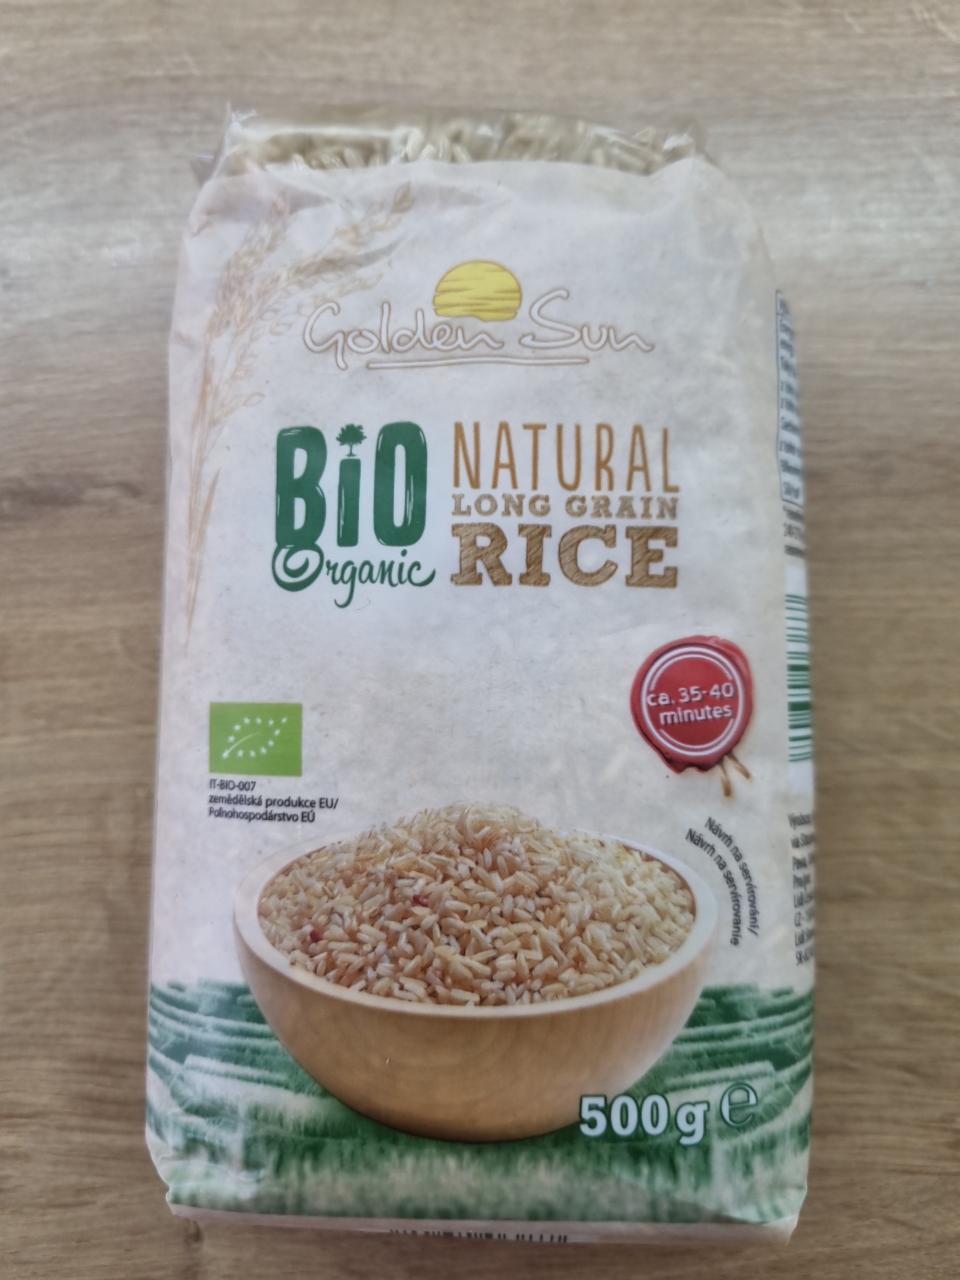 Fotografie - Bio organic natural long grain rice (dlouhozrnná rýže loupaná) Golden Sun